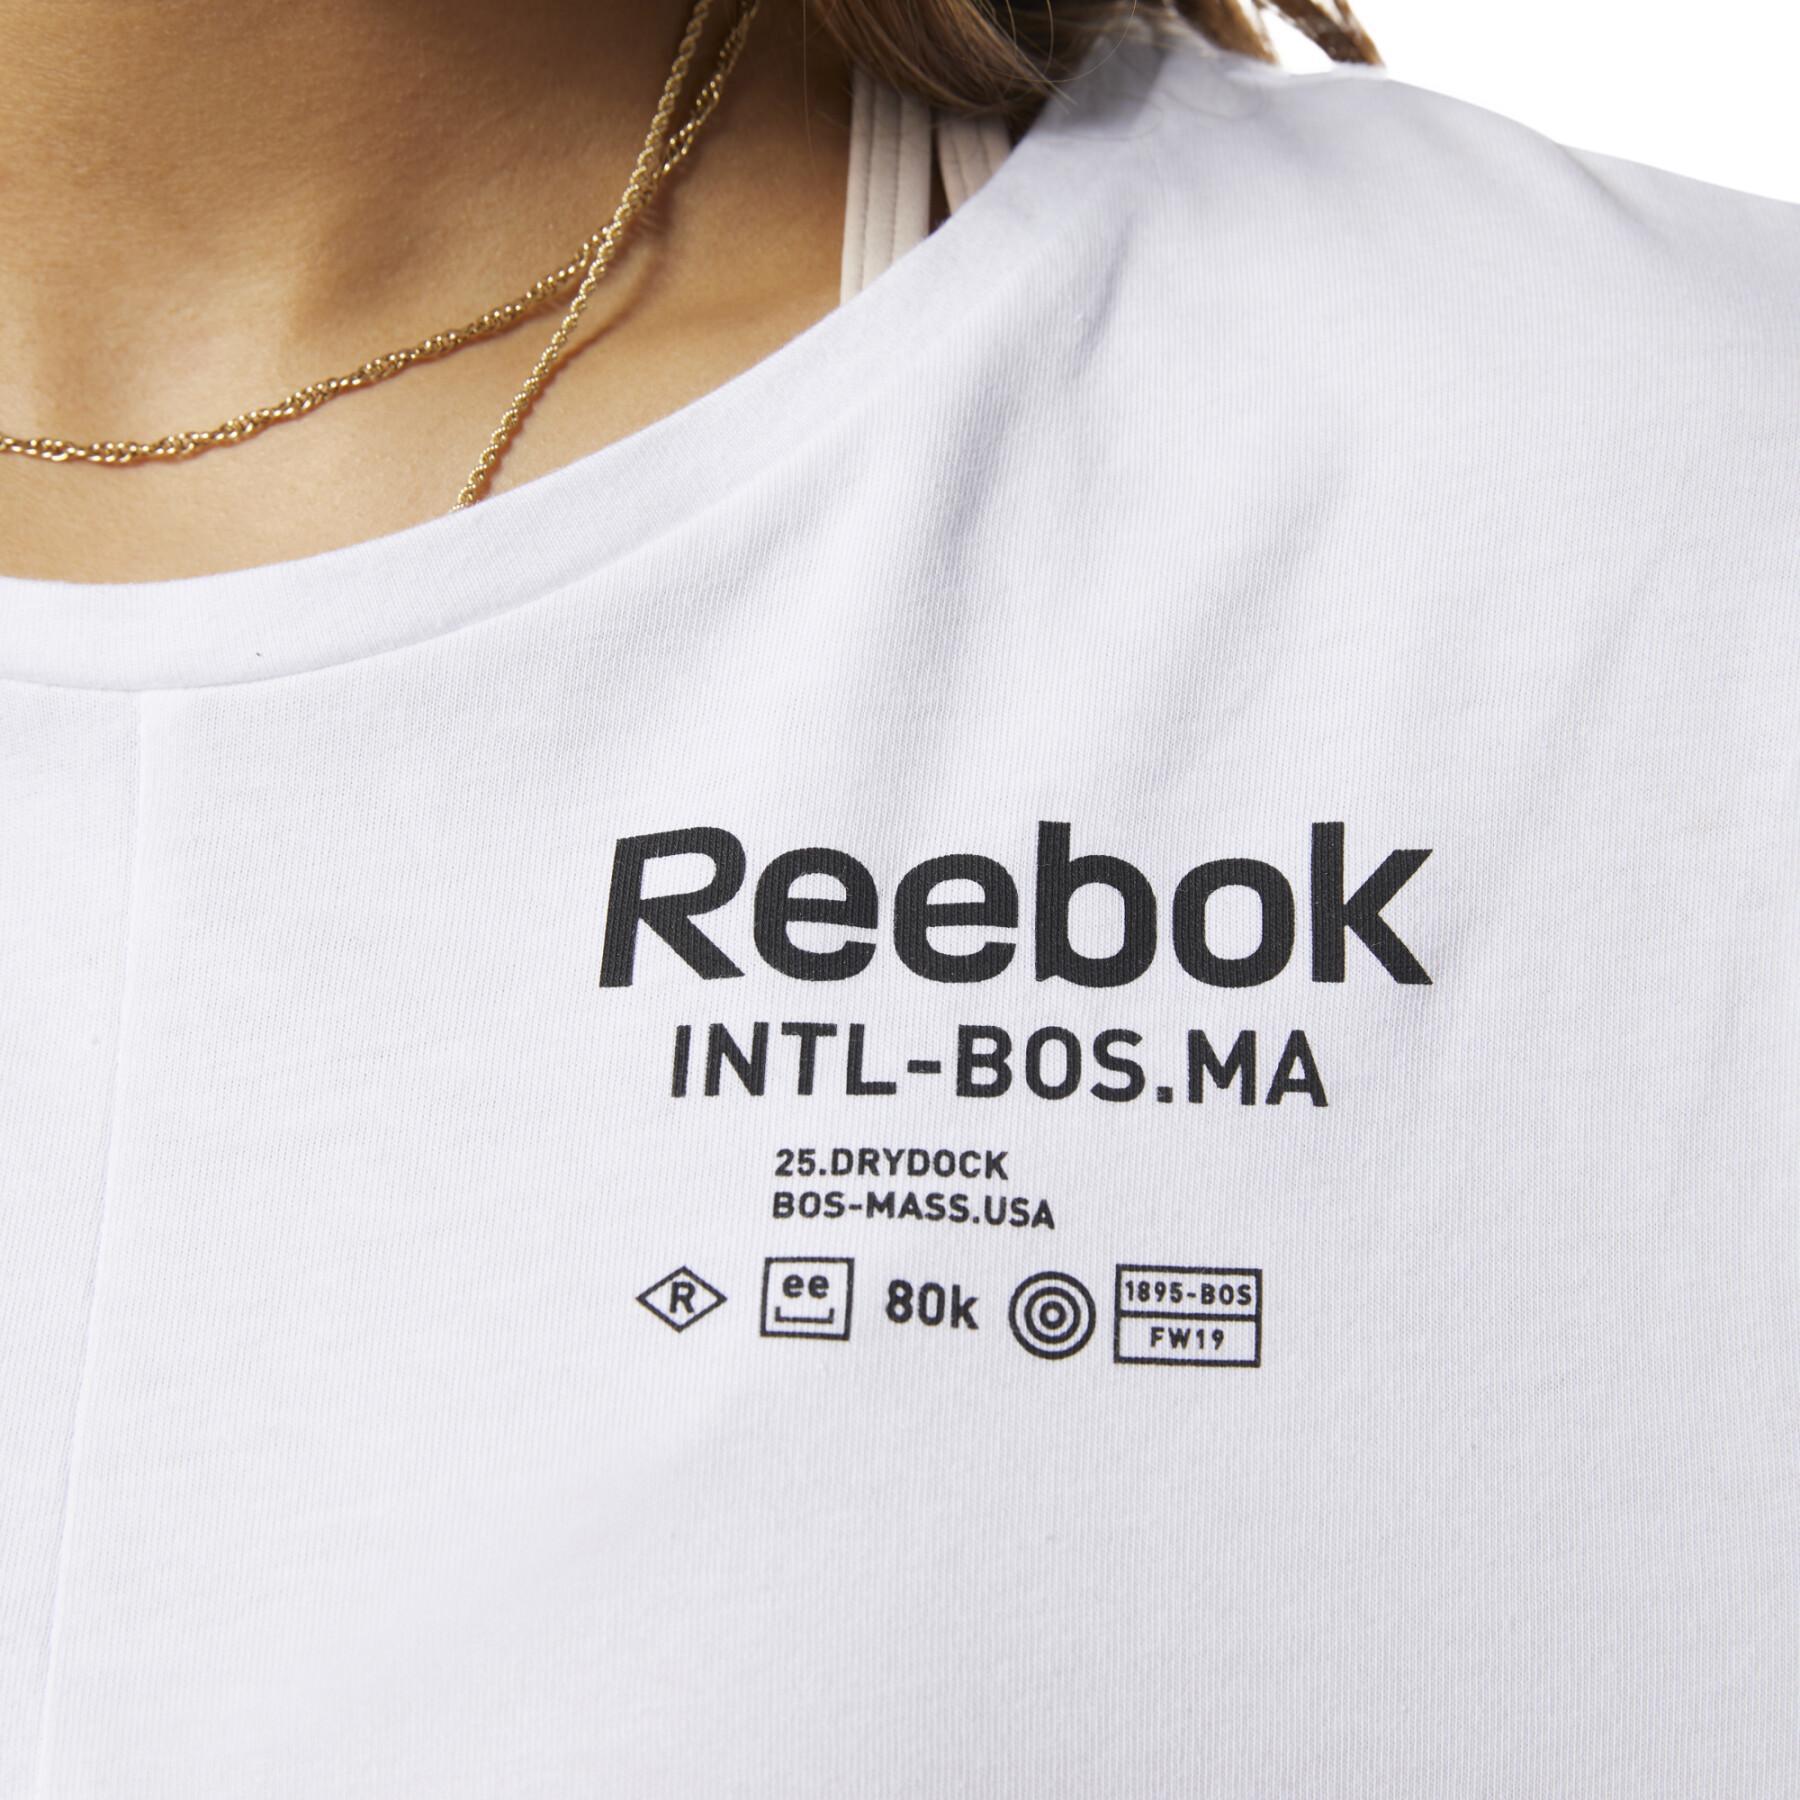 Damen-T-Shirt Reebok Training Supply Graphic